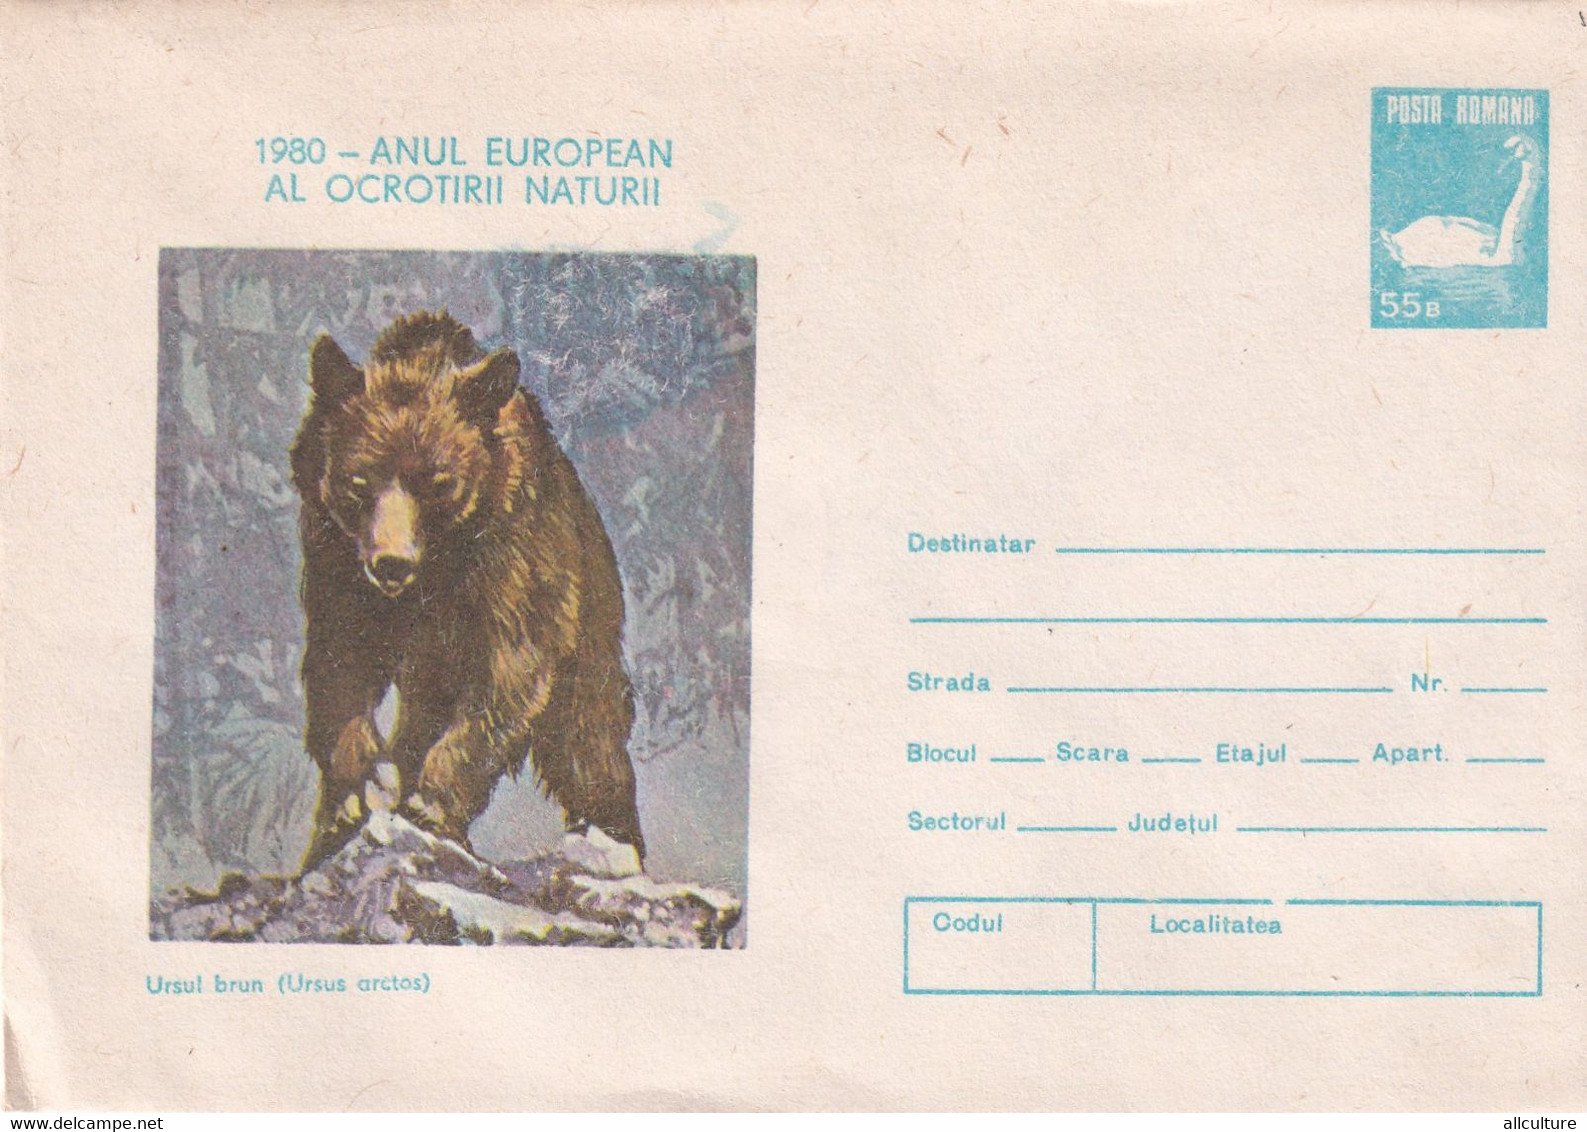 A3139 - The Brown Bear (ursus Arctos) European Year Of Nature Protection 1980 Romania Posta Romana Cover Stationery - Bären